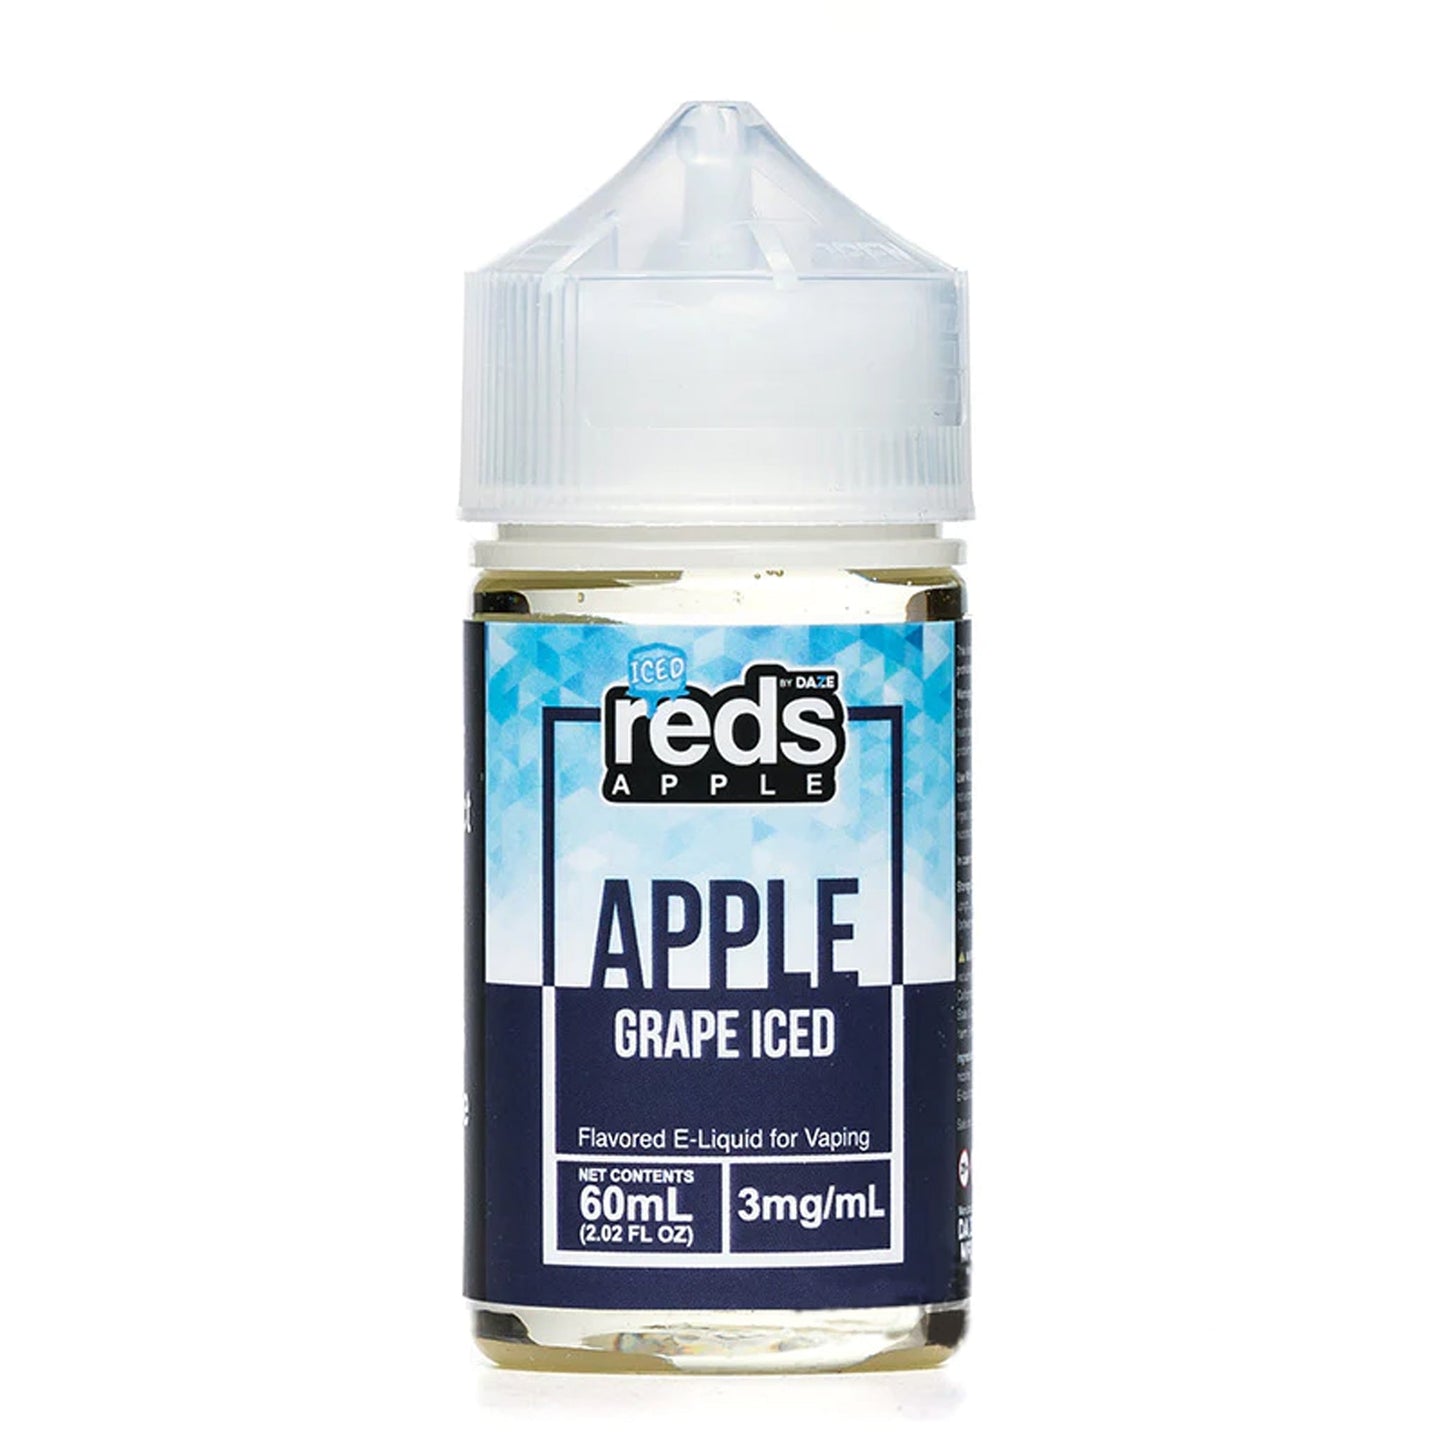 7 Daze Reds Apple 60ML - Grape Apple Iced - Mobs Enterprise